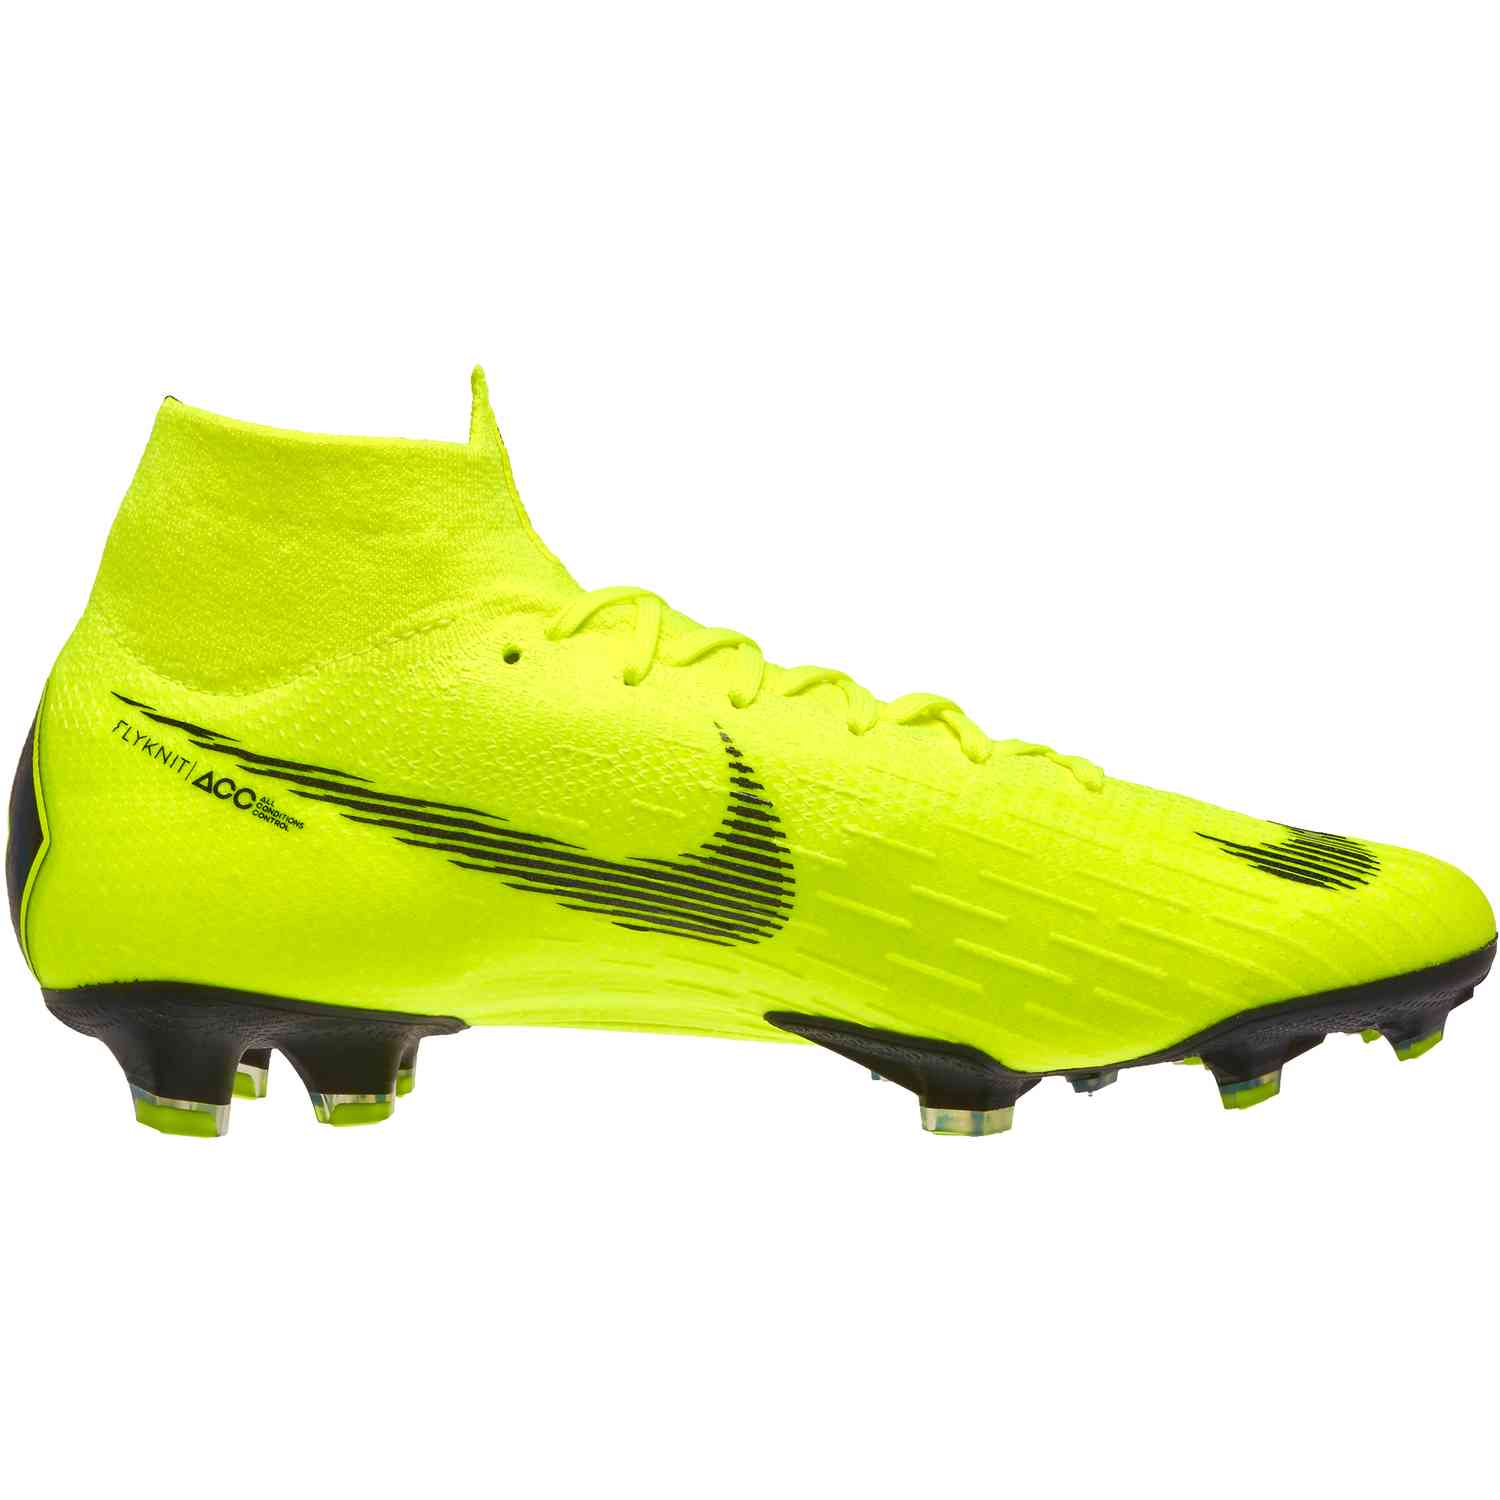 Online sale Nike Mercurial Superfly VI Elite FG Football Boots.